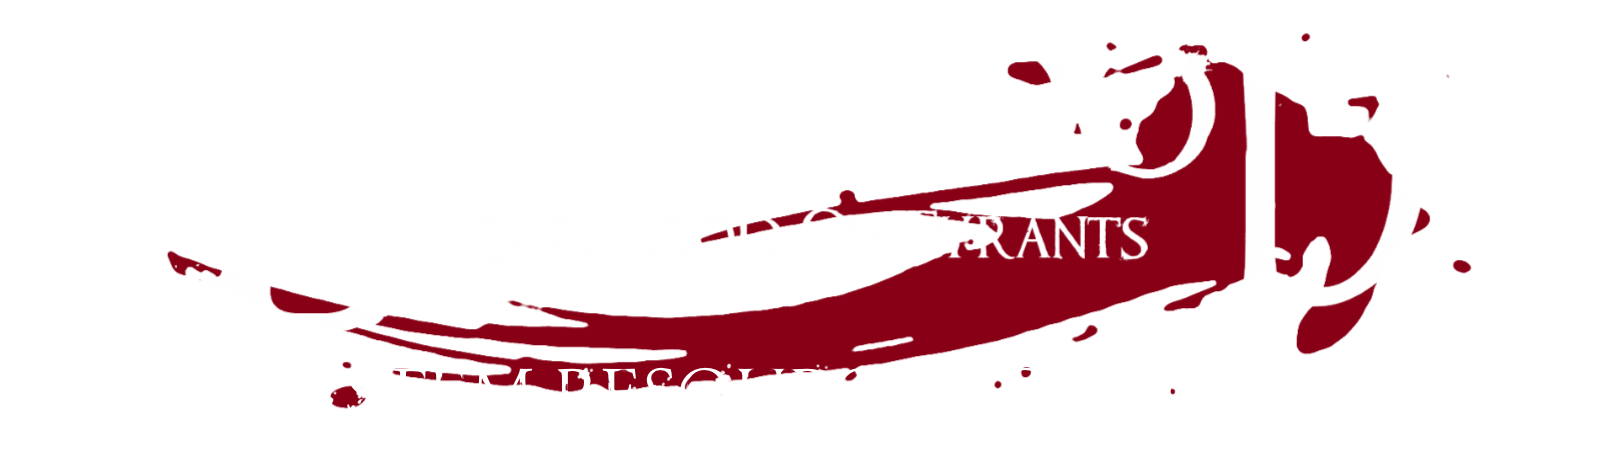 Brinkwood System Resource Document